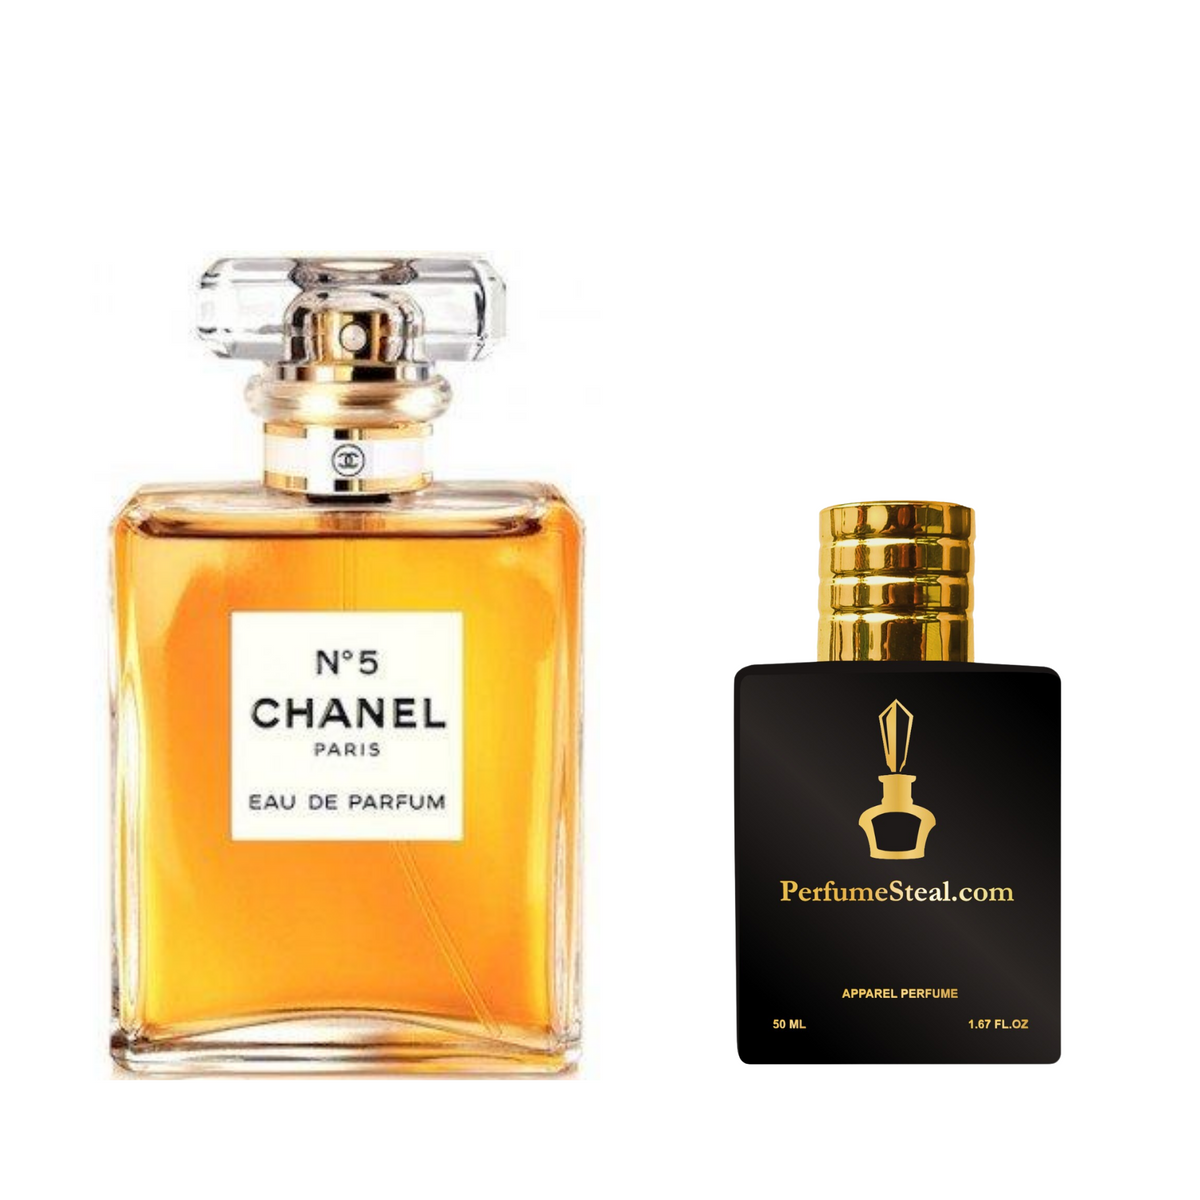 Chanel No. 5 type Perfume –